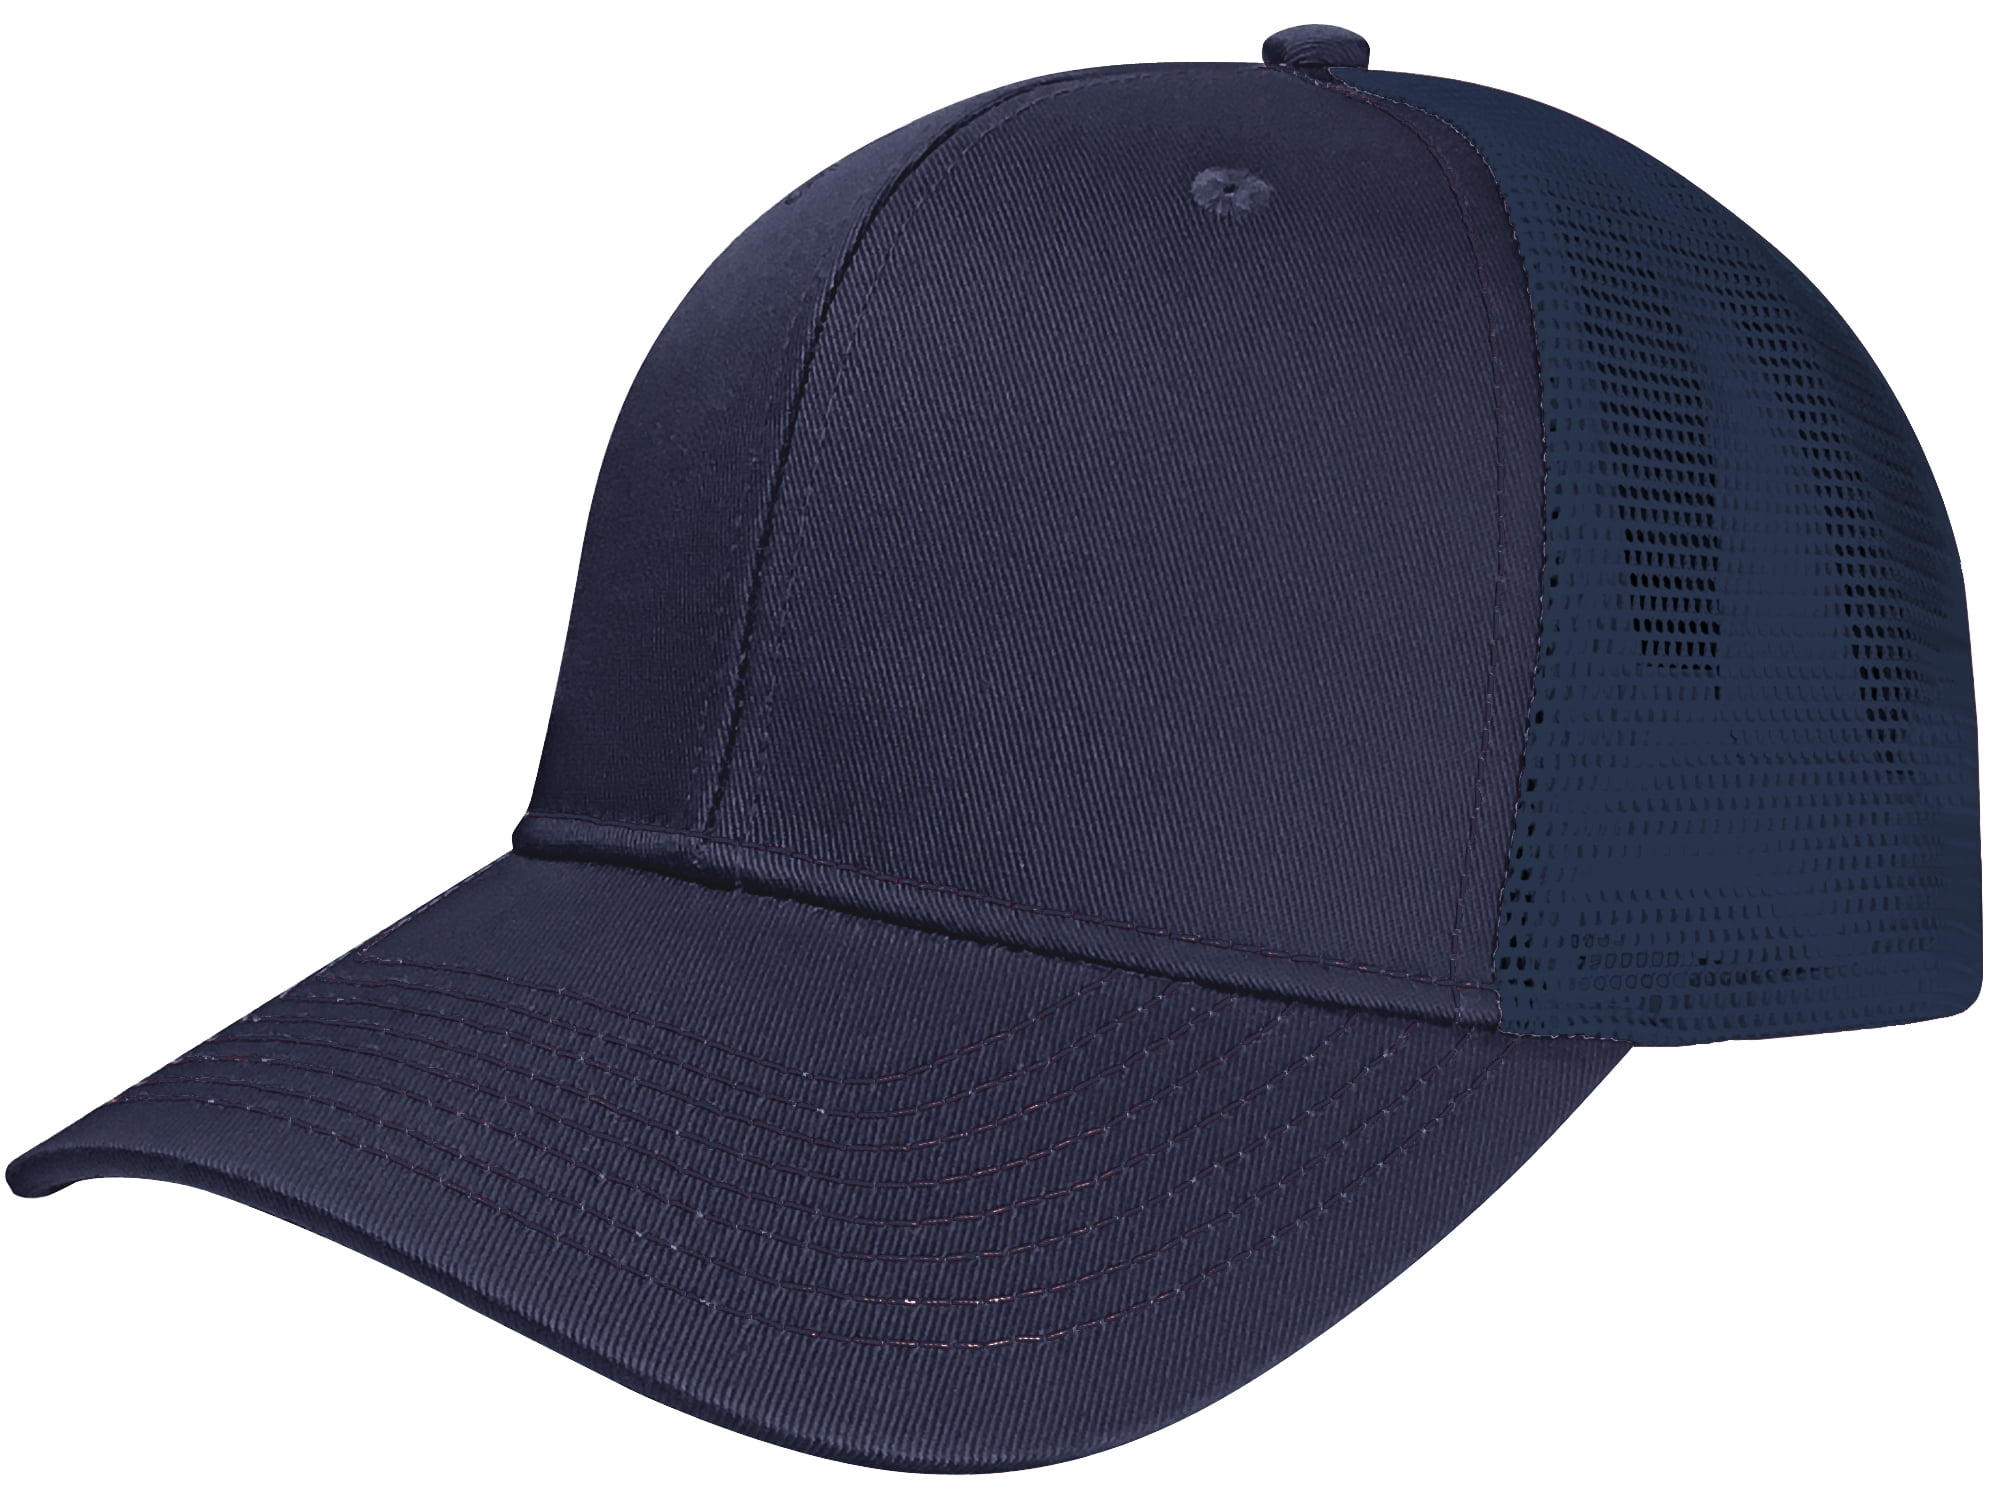 Buy Mesh Baseball Cap Walmart Inc. Adjustable Snapback Caps